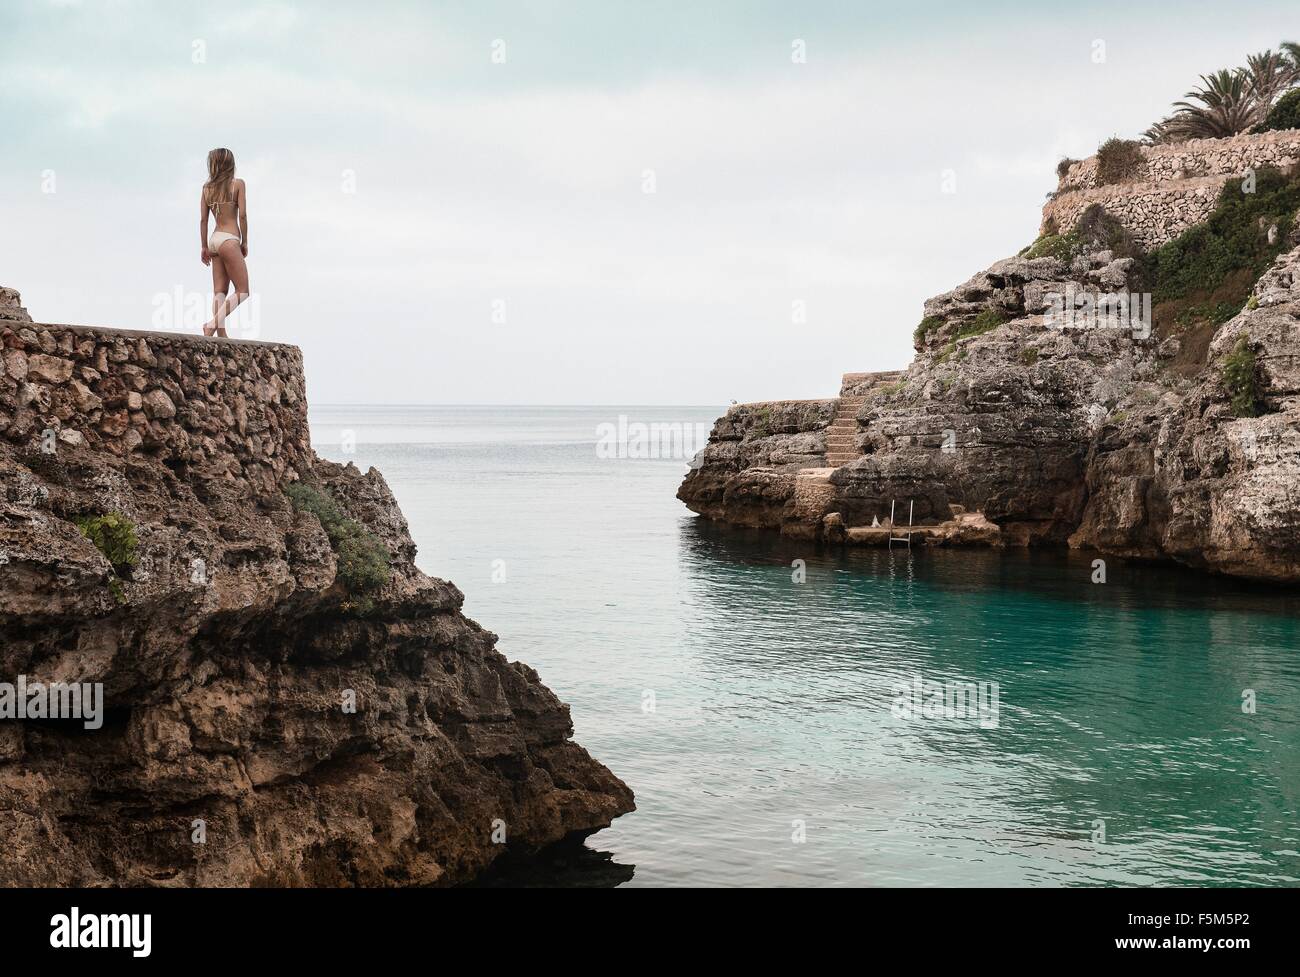 Rear view of young woman in bikini looking out from Cala en Brut, Menorca, Balearic islands, Spain Stock Photo